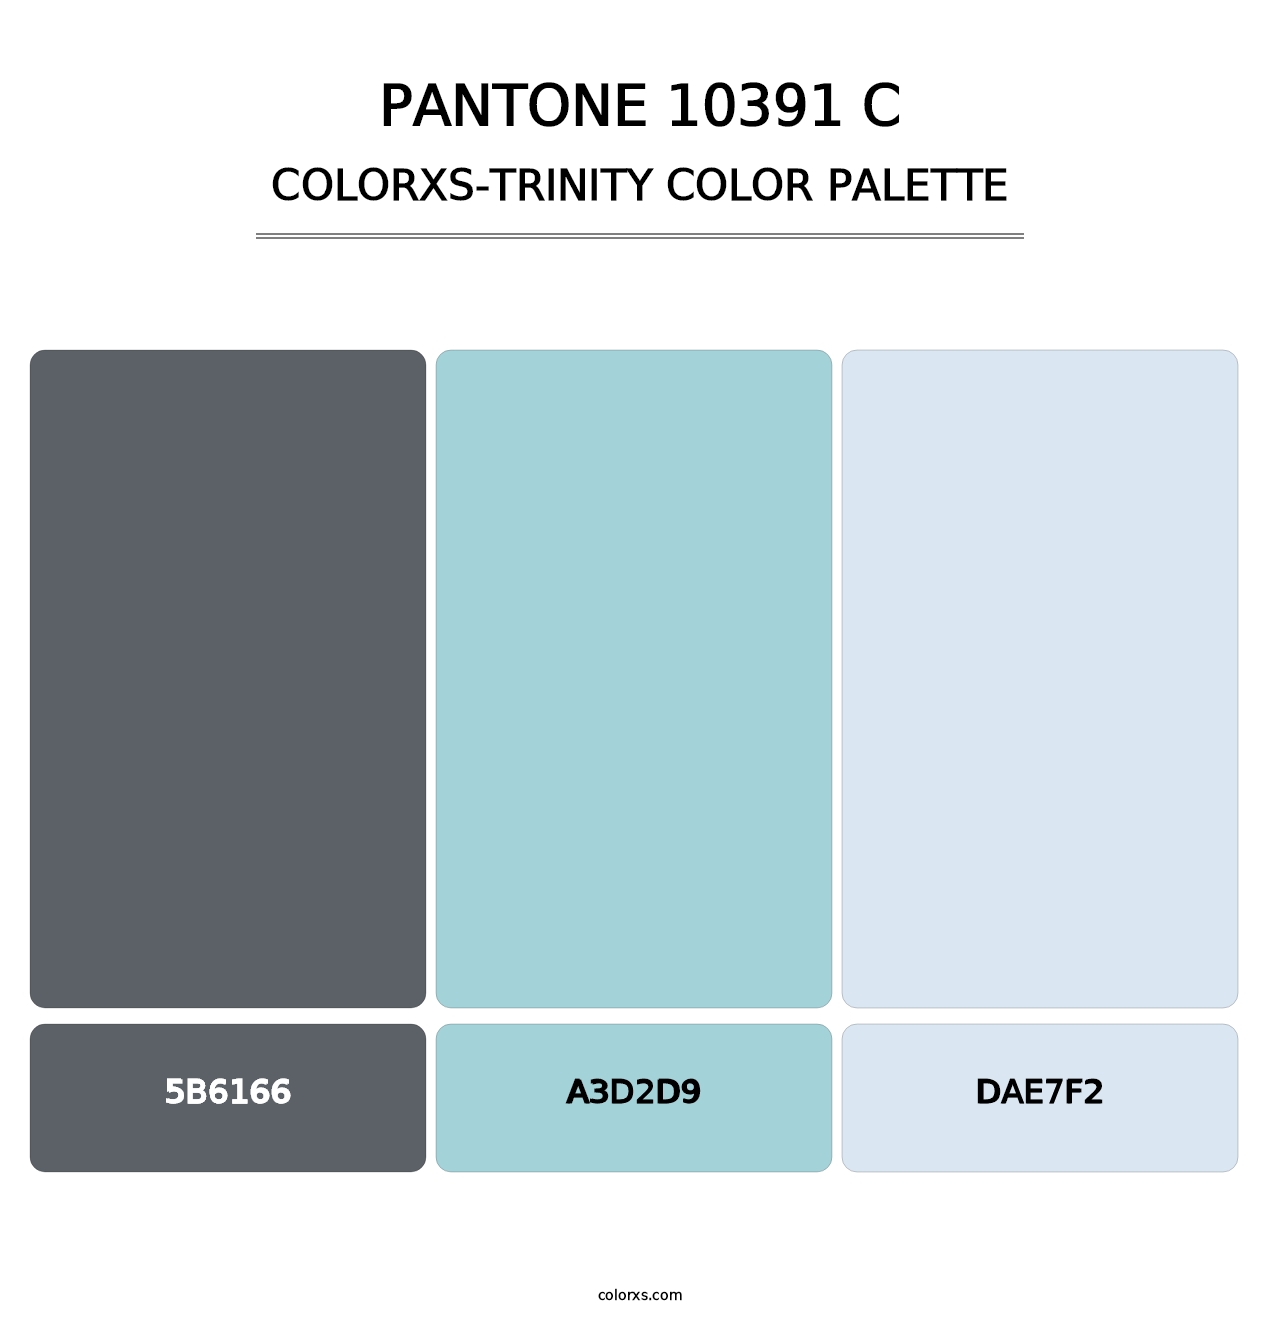 PANTONE 10391 C - Colorxs Trinity Palette